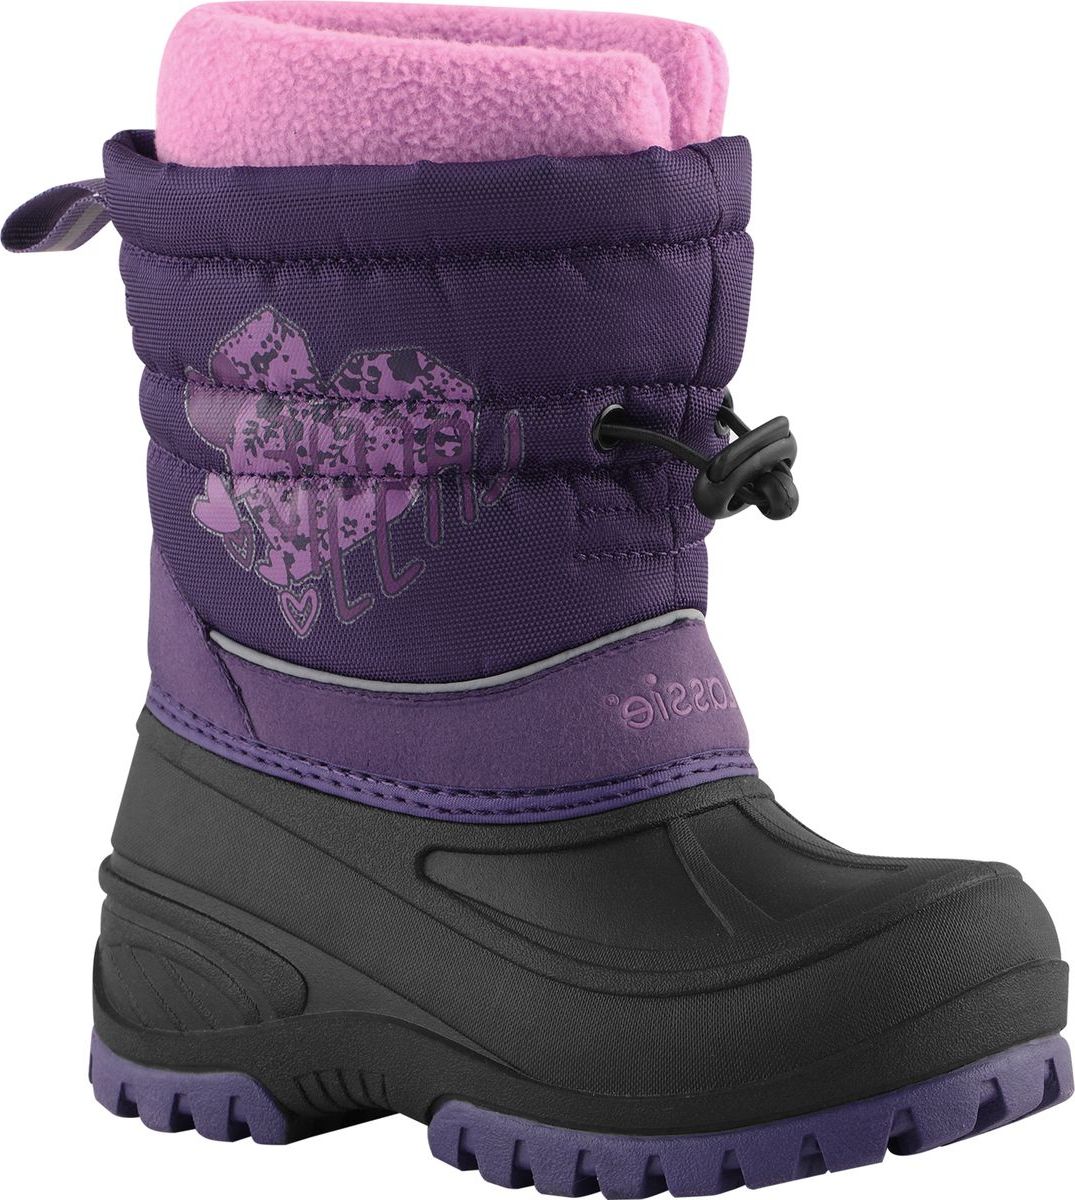 Ботинки детские Lassie Coldwell, цвет: пурпурный. 7691215950. Размер 24